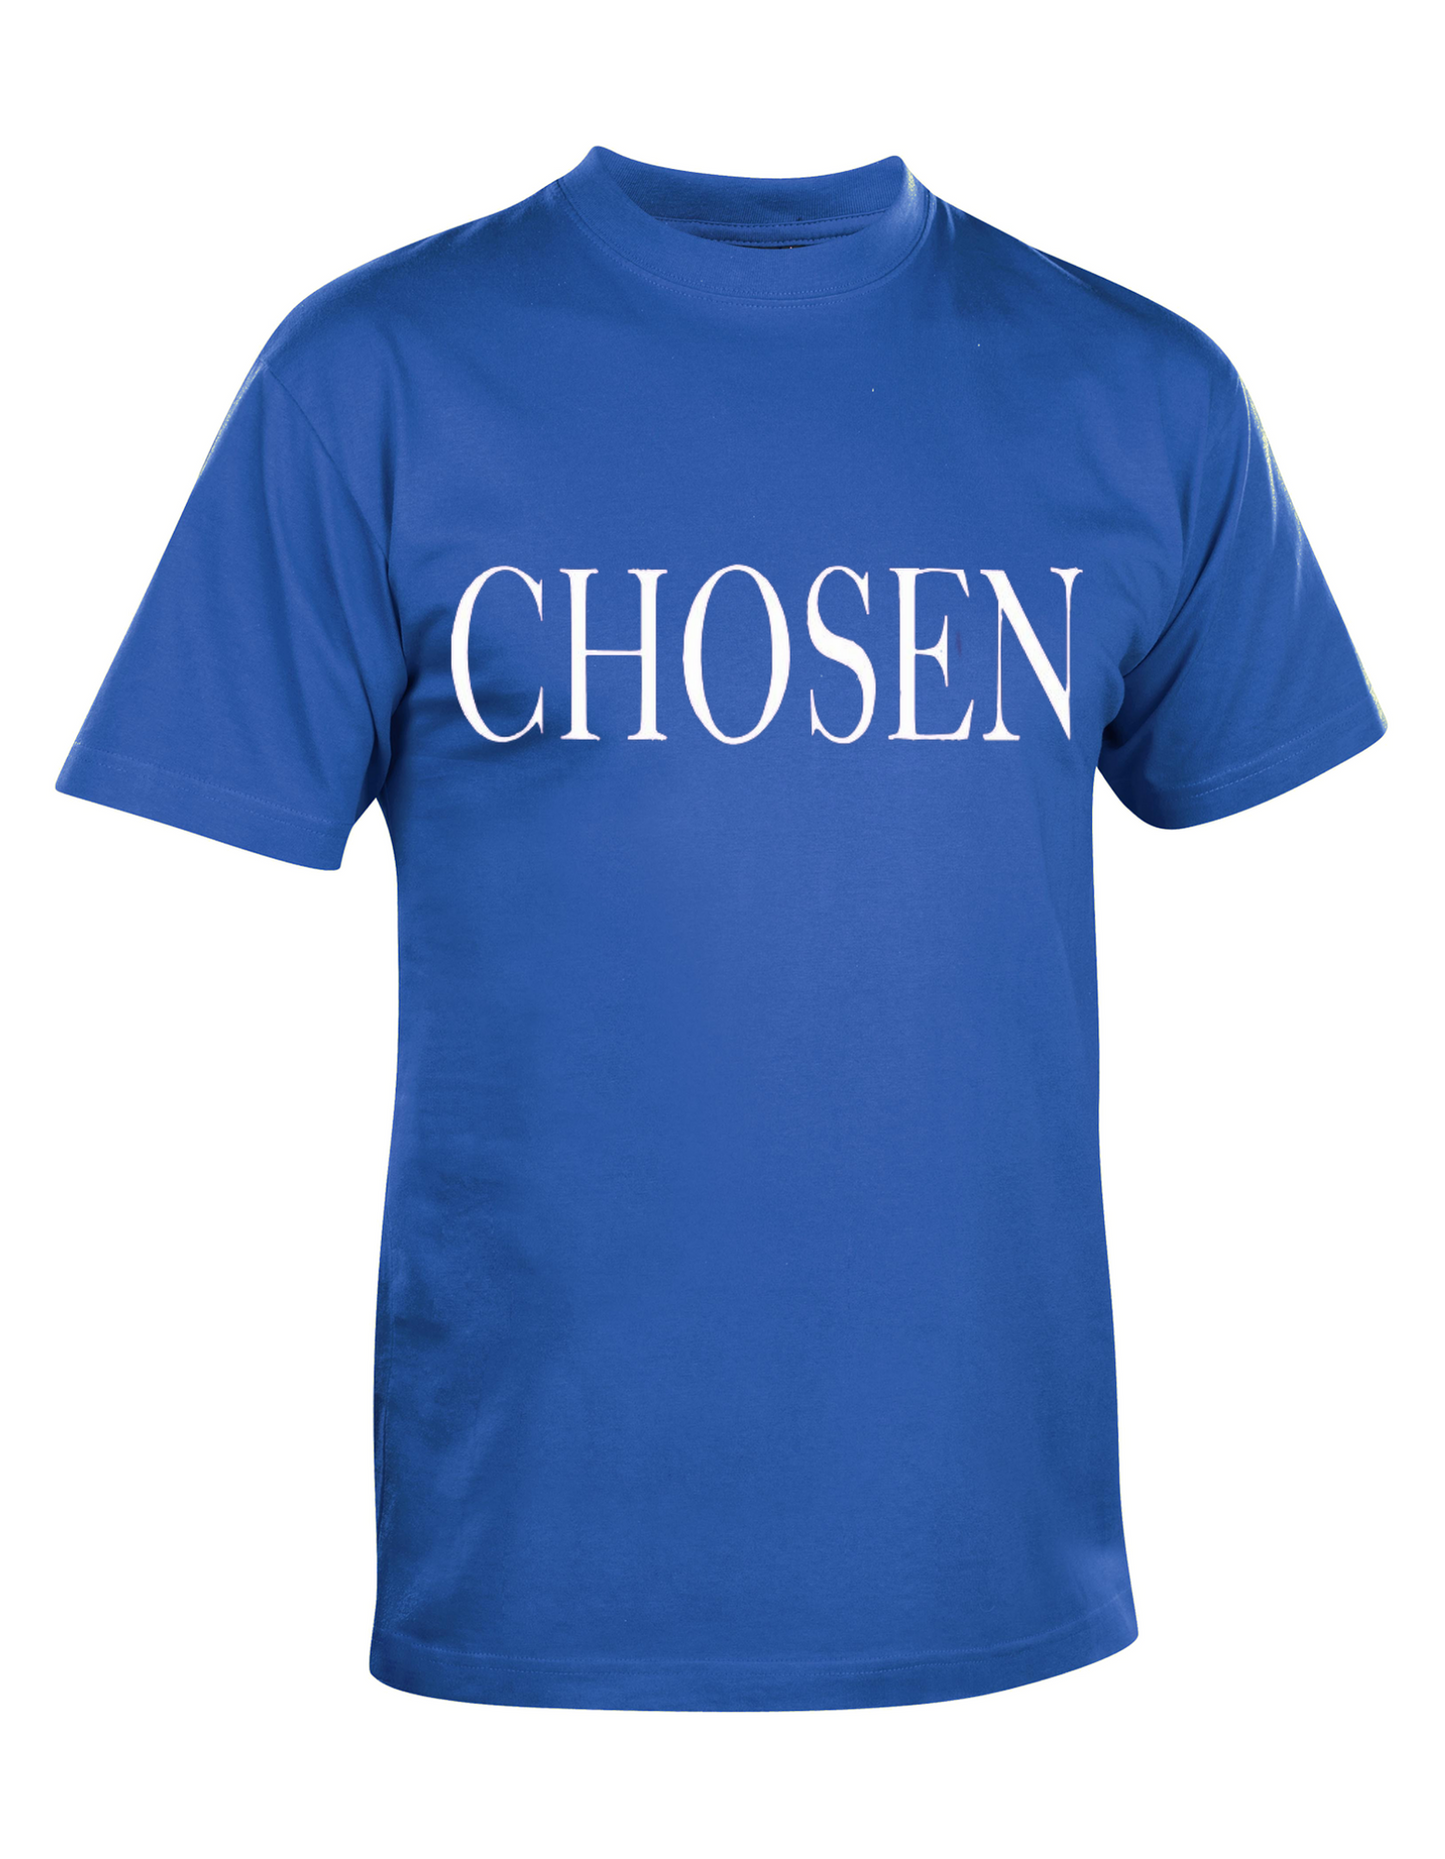 Chosen Plain Unisex Short Sleeve Christian T-Shirt